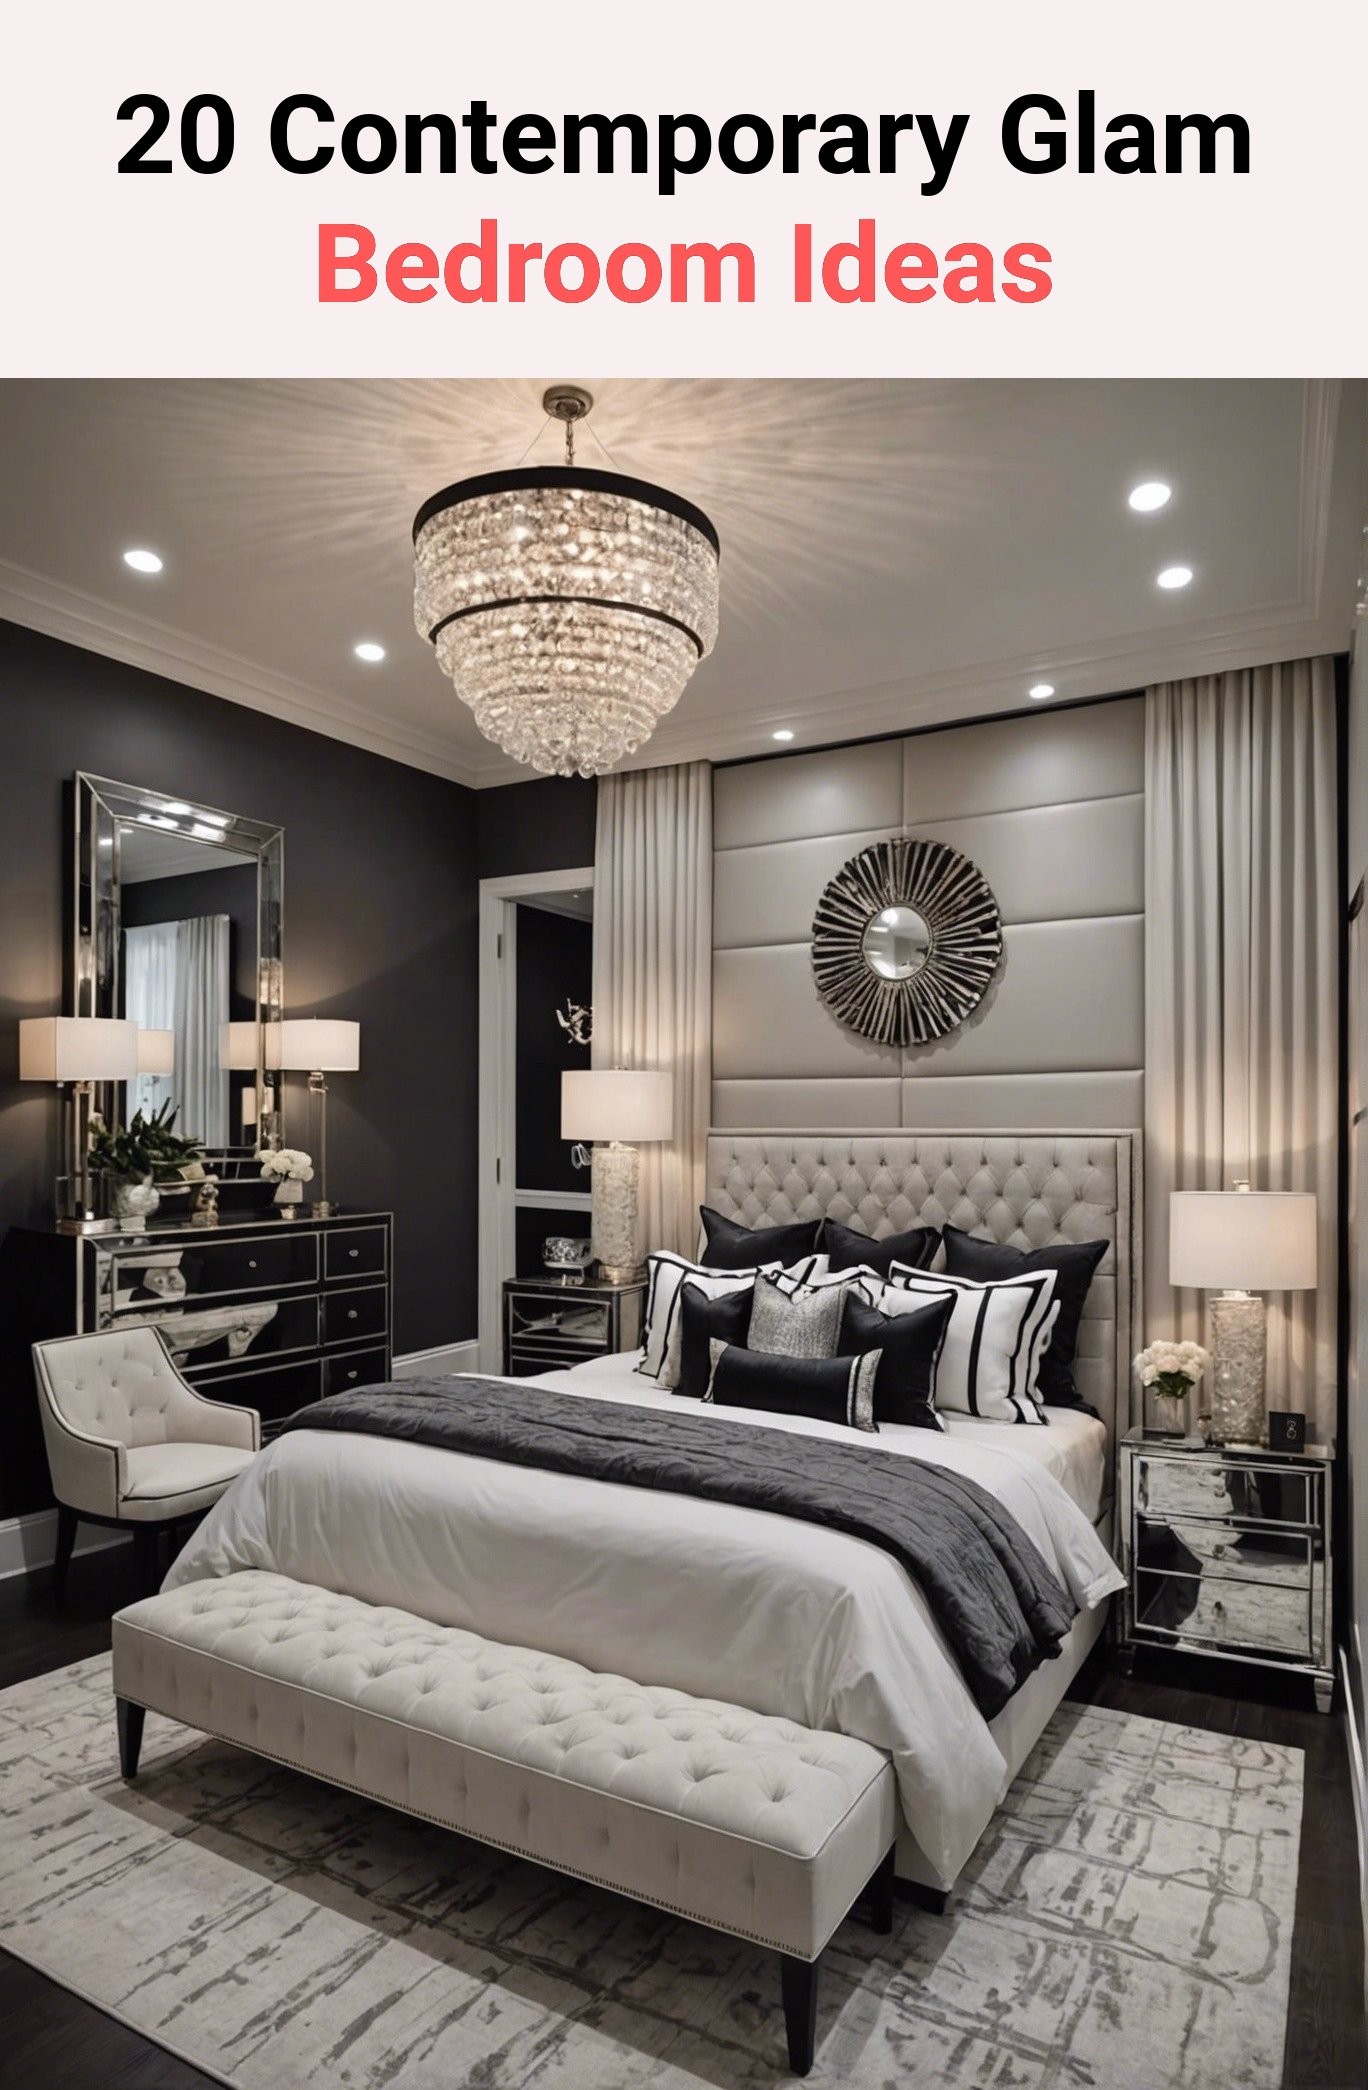 20 Contemporary Glam Bedroom Ideas